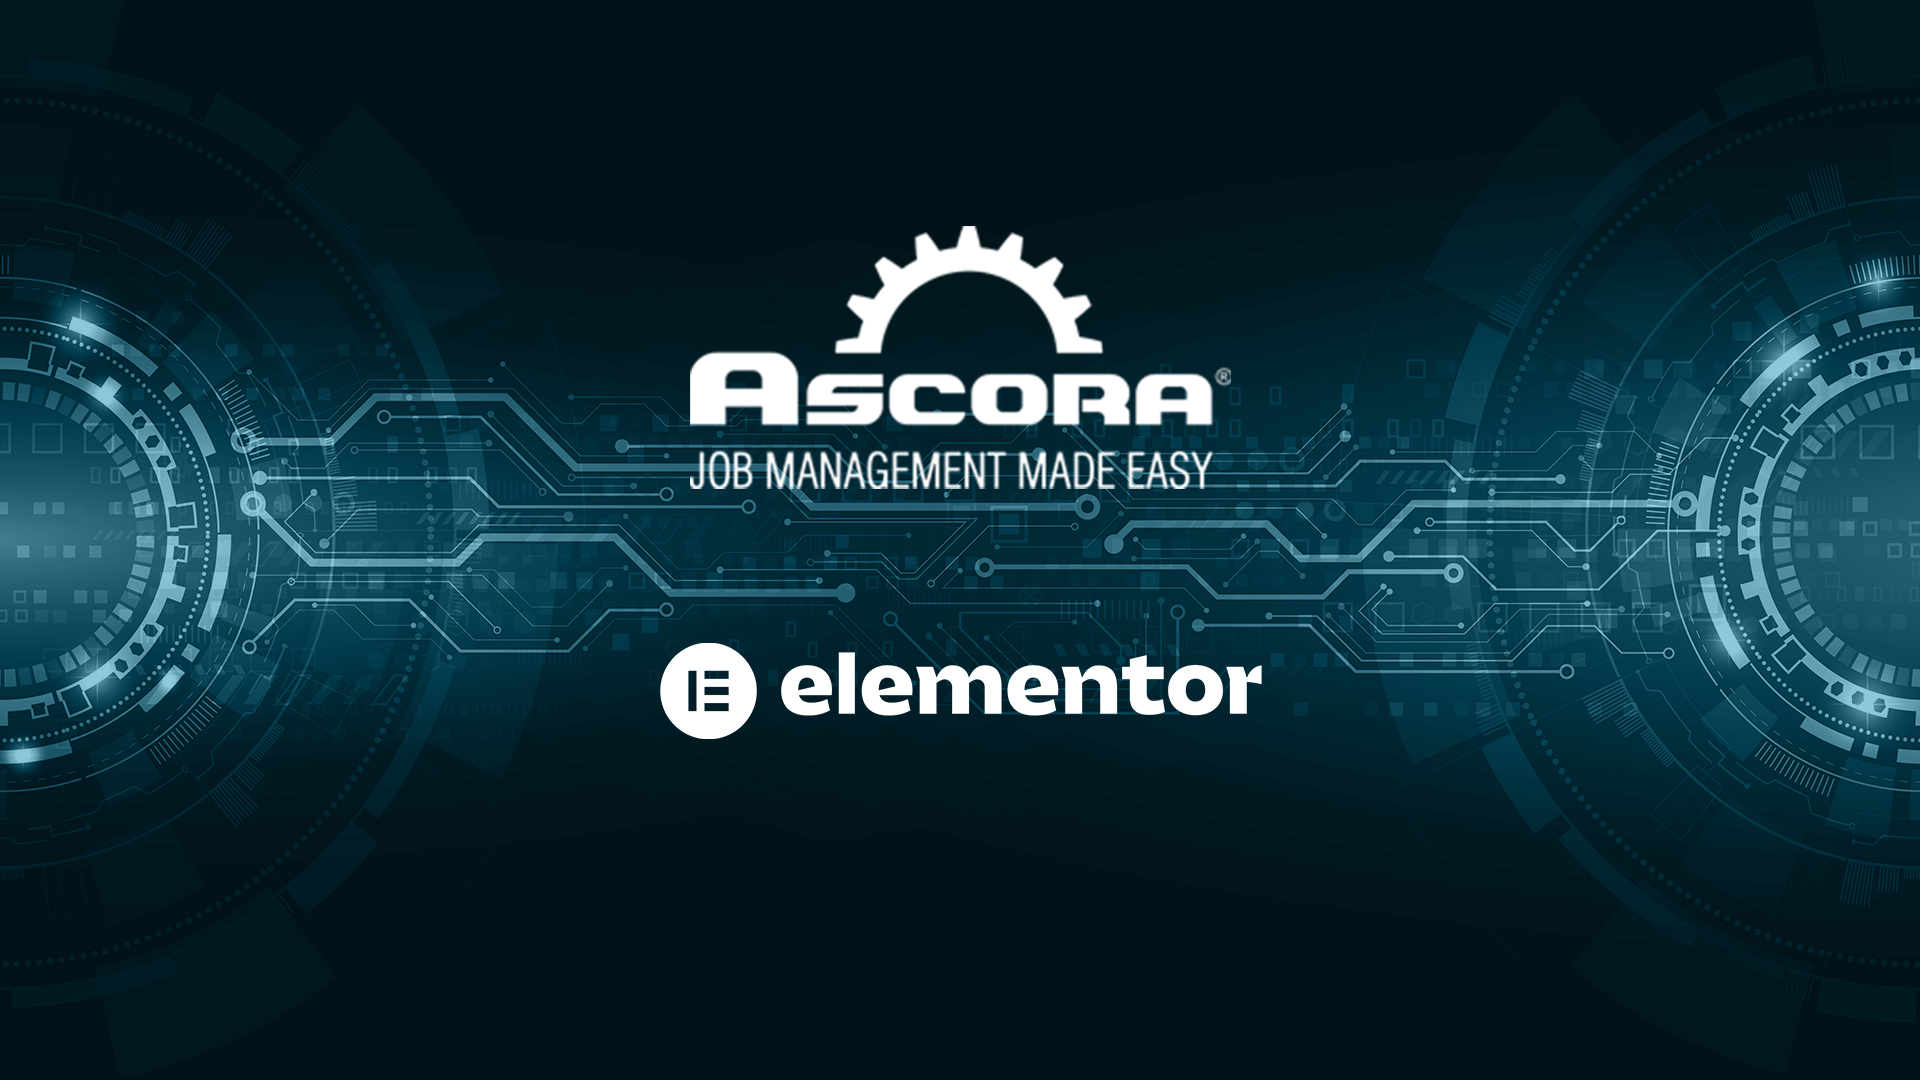 Elementor To Ascora Integration - WordPress - Rubix Studios